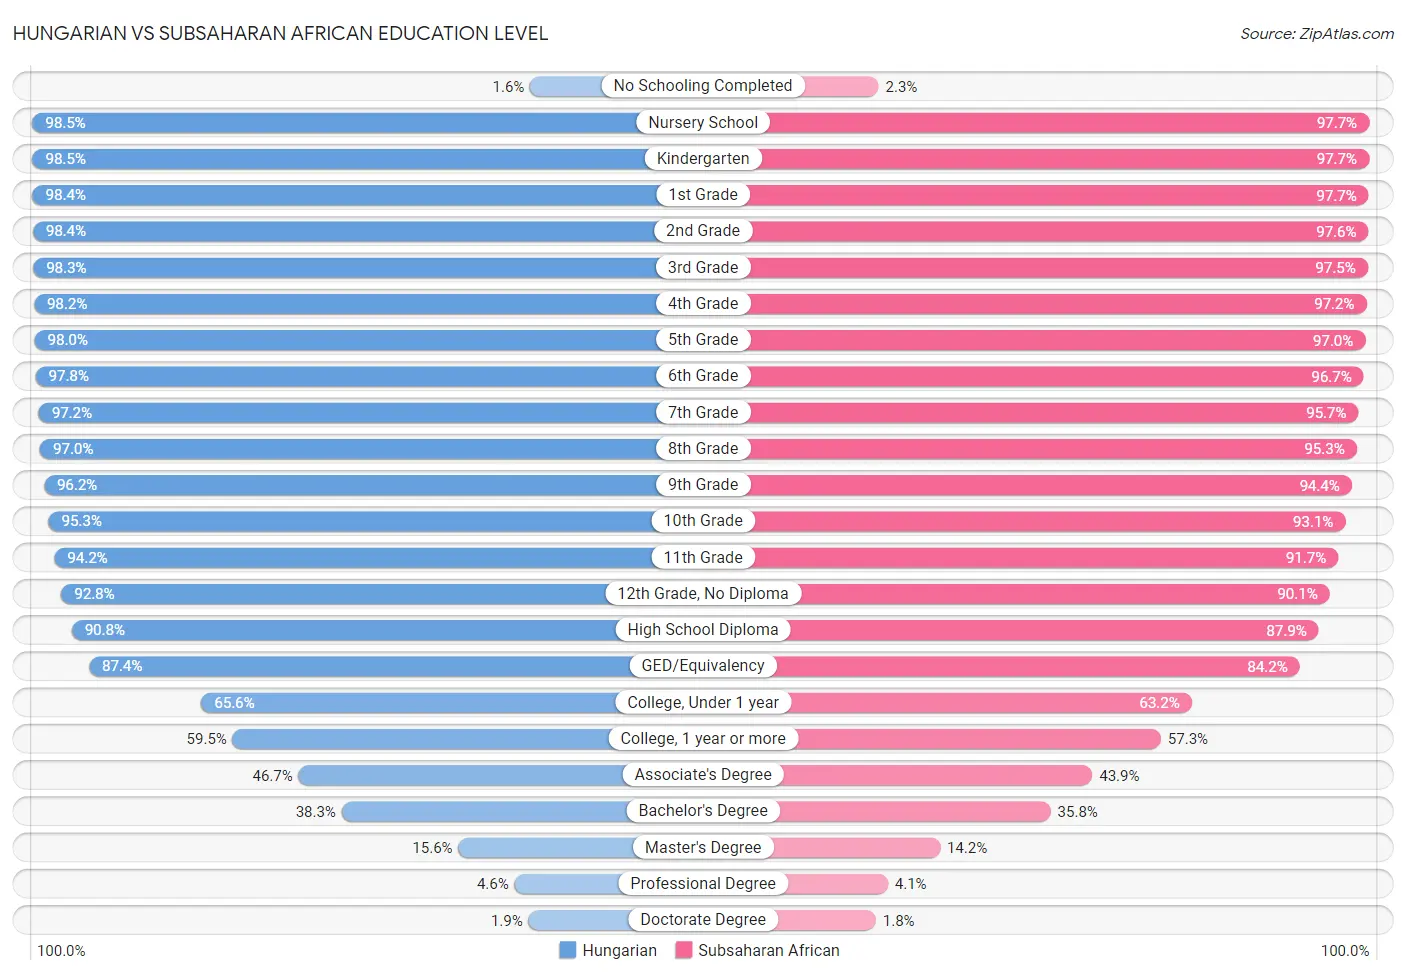 Hungarian vs Subsaharan African Education Level